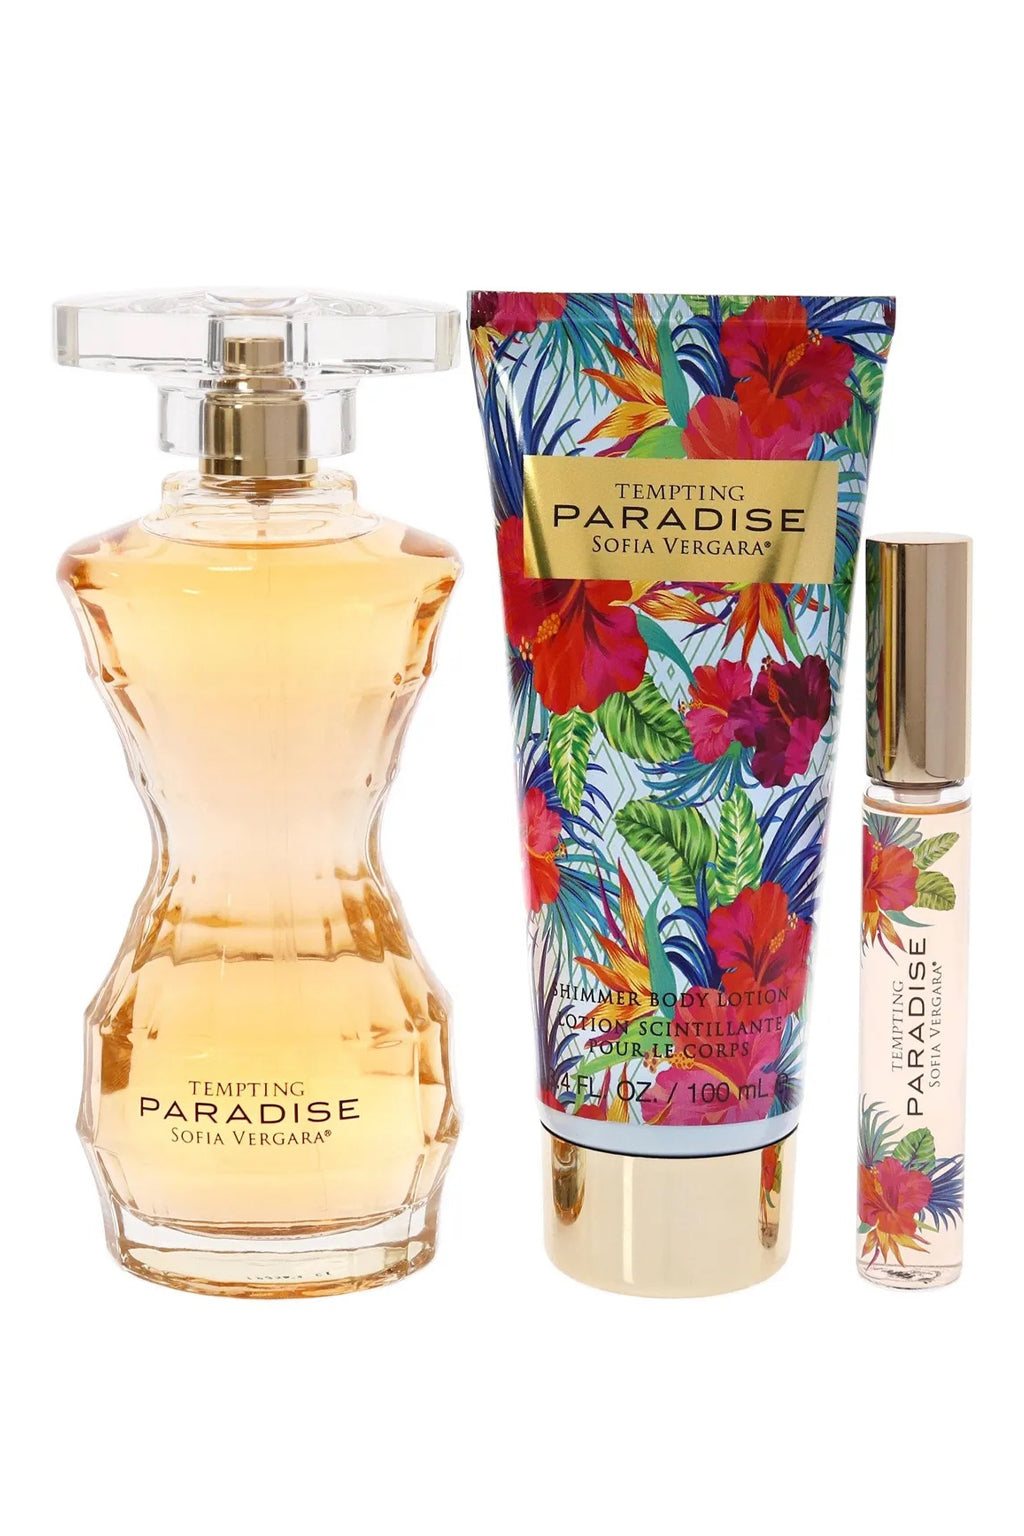 Sofia Vergara - Tempting Paradise Eau De Parfume Set